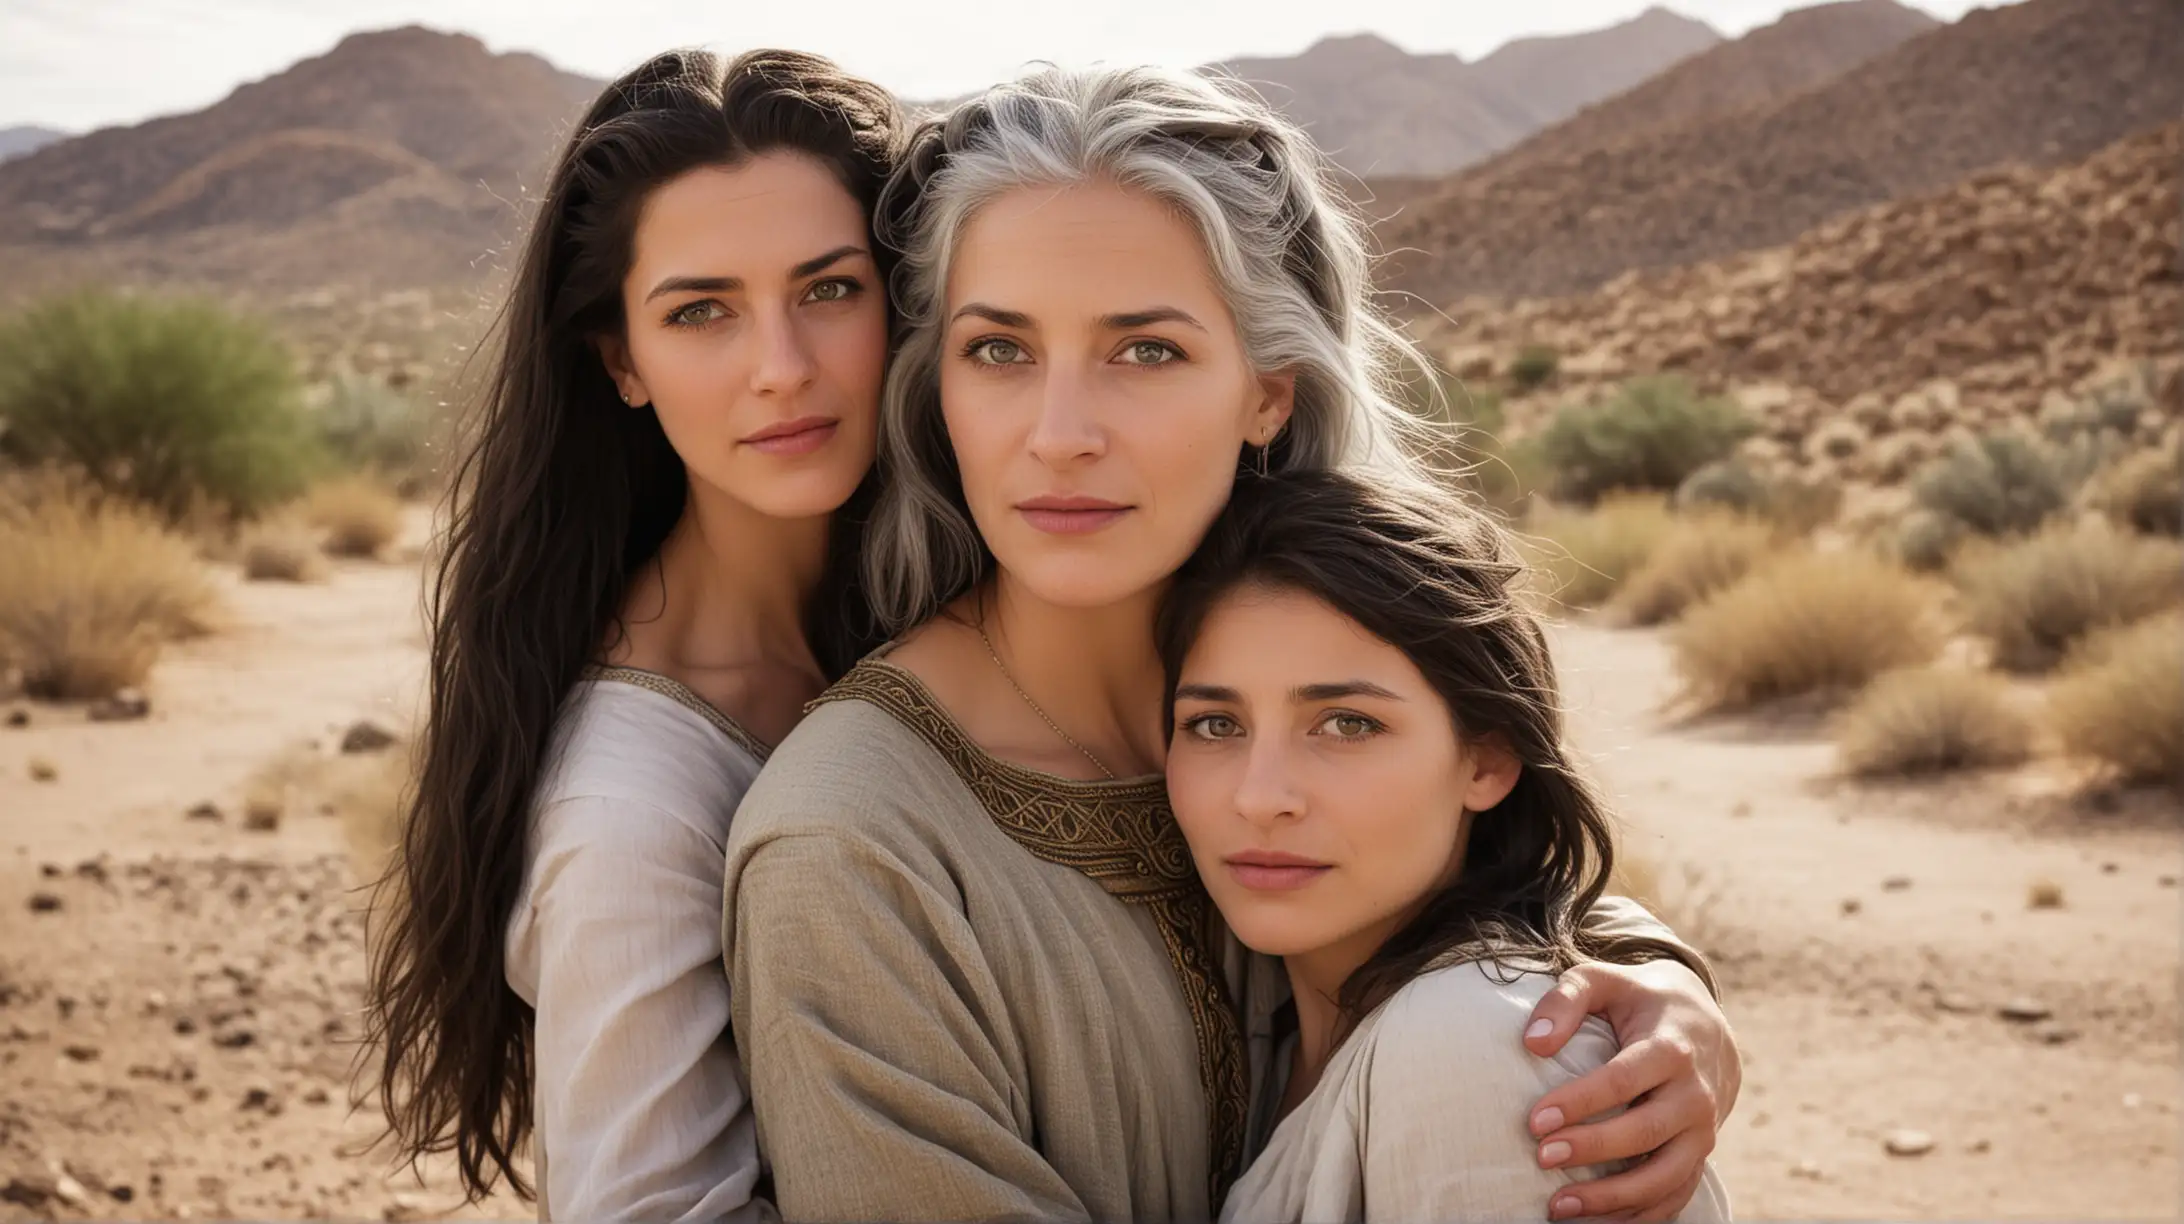 Biblical Era Mother and Daughter in Desert Town